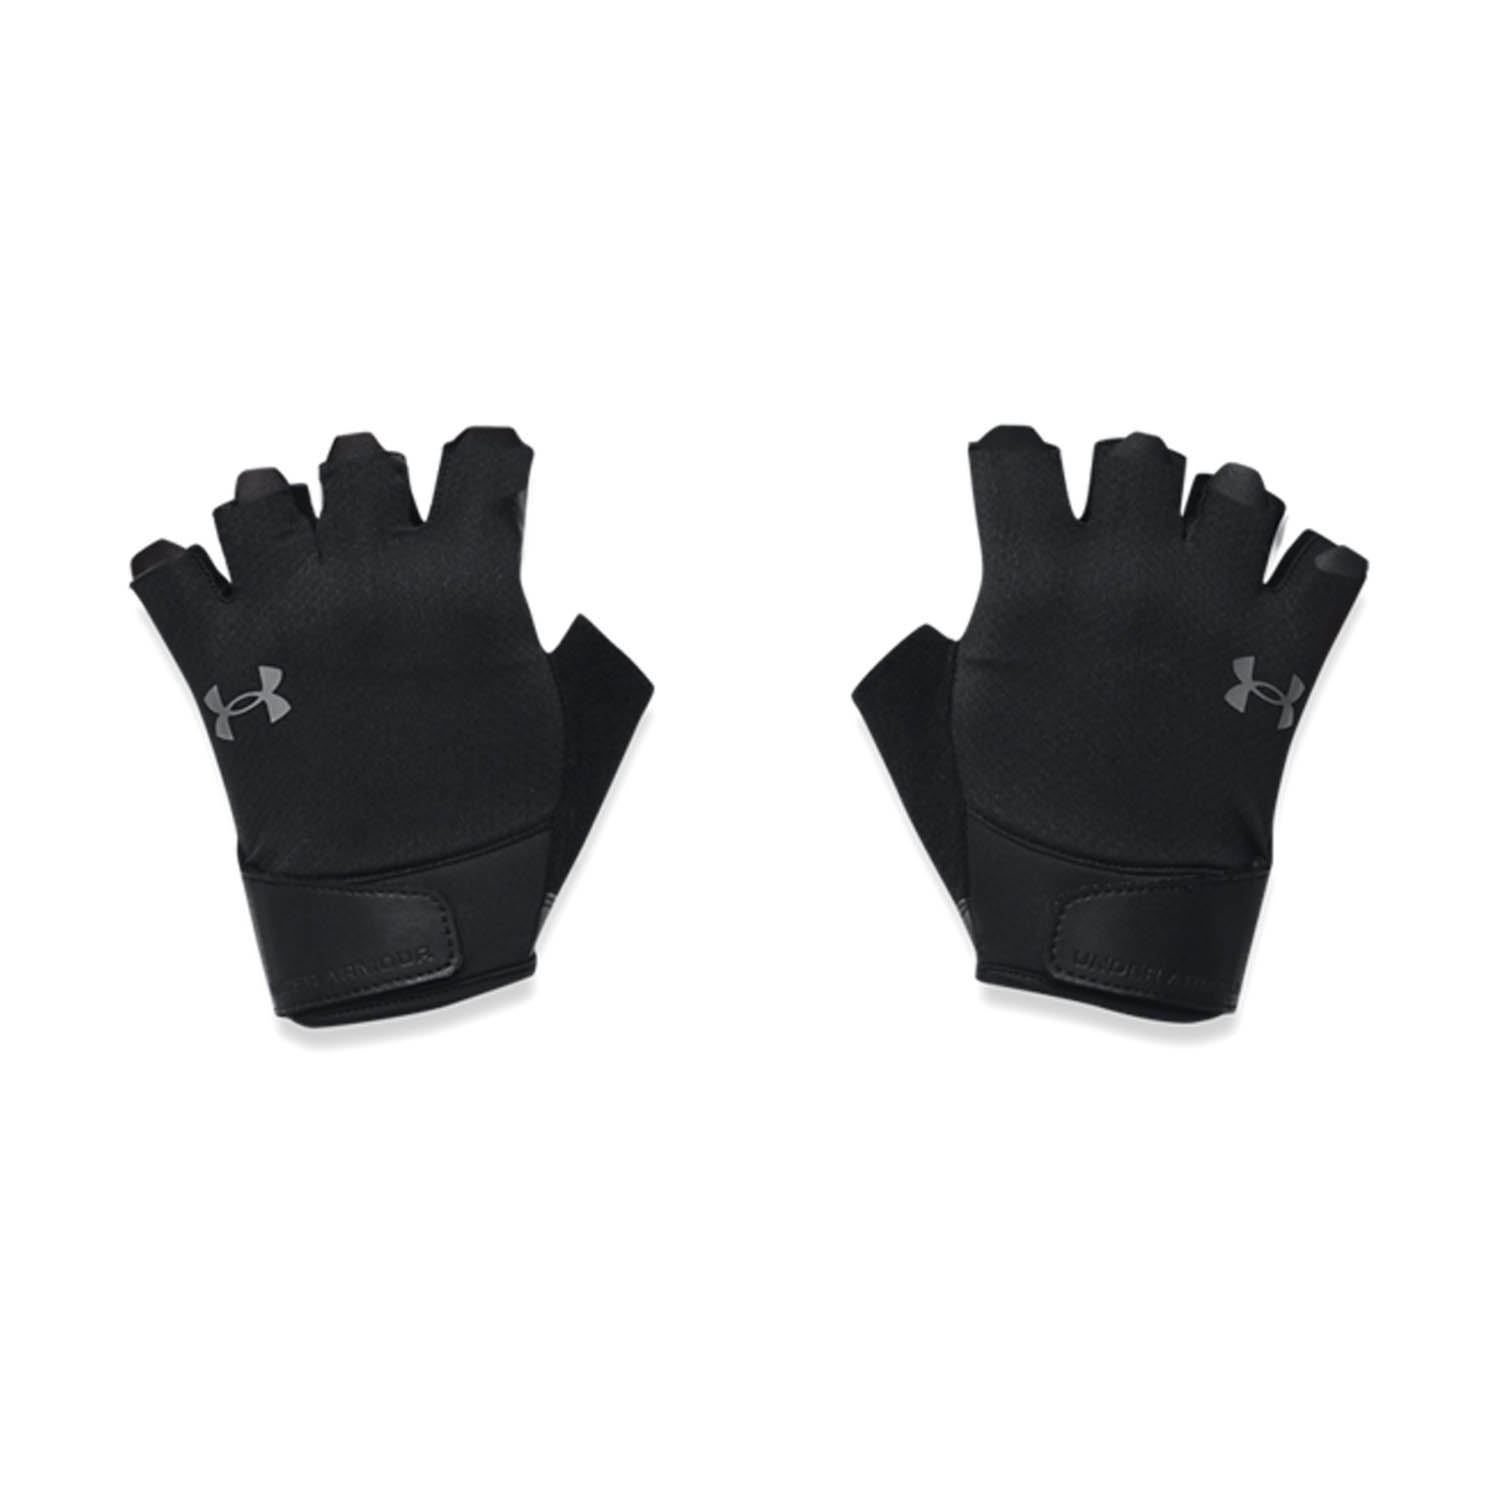 Under Armour Logo Gloves - Black